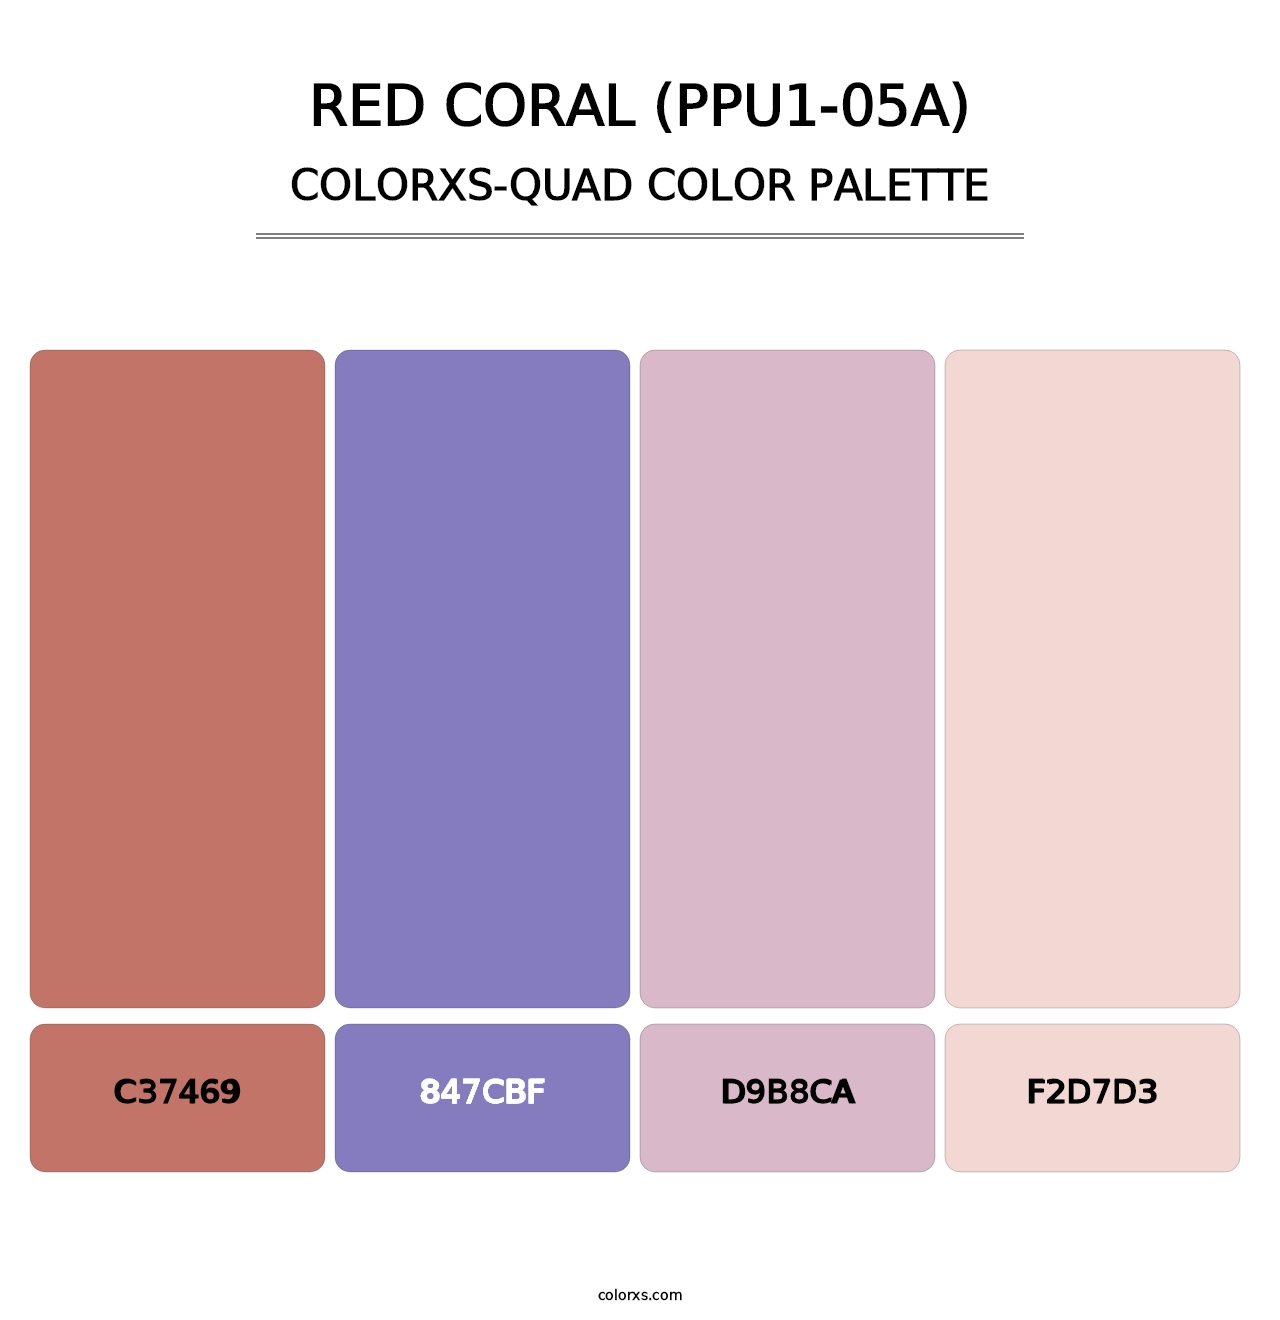 Red Coral (PPU1-05A) - Colorxs Quad Palette